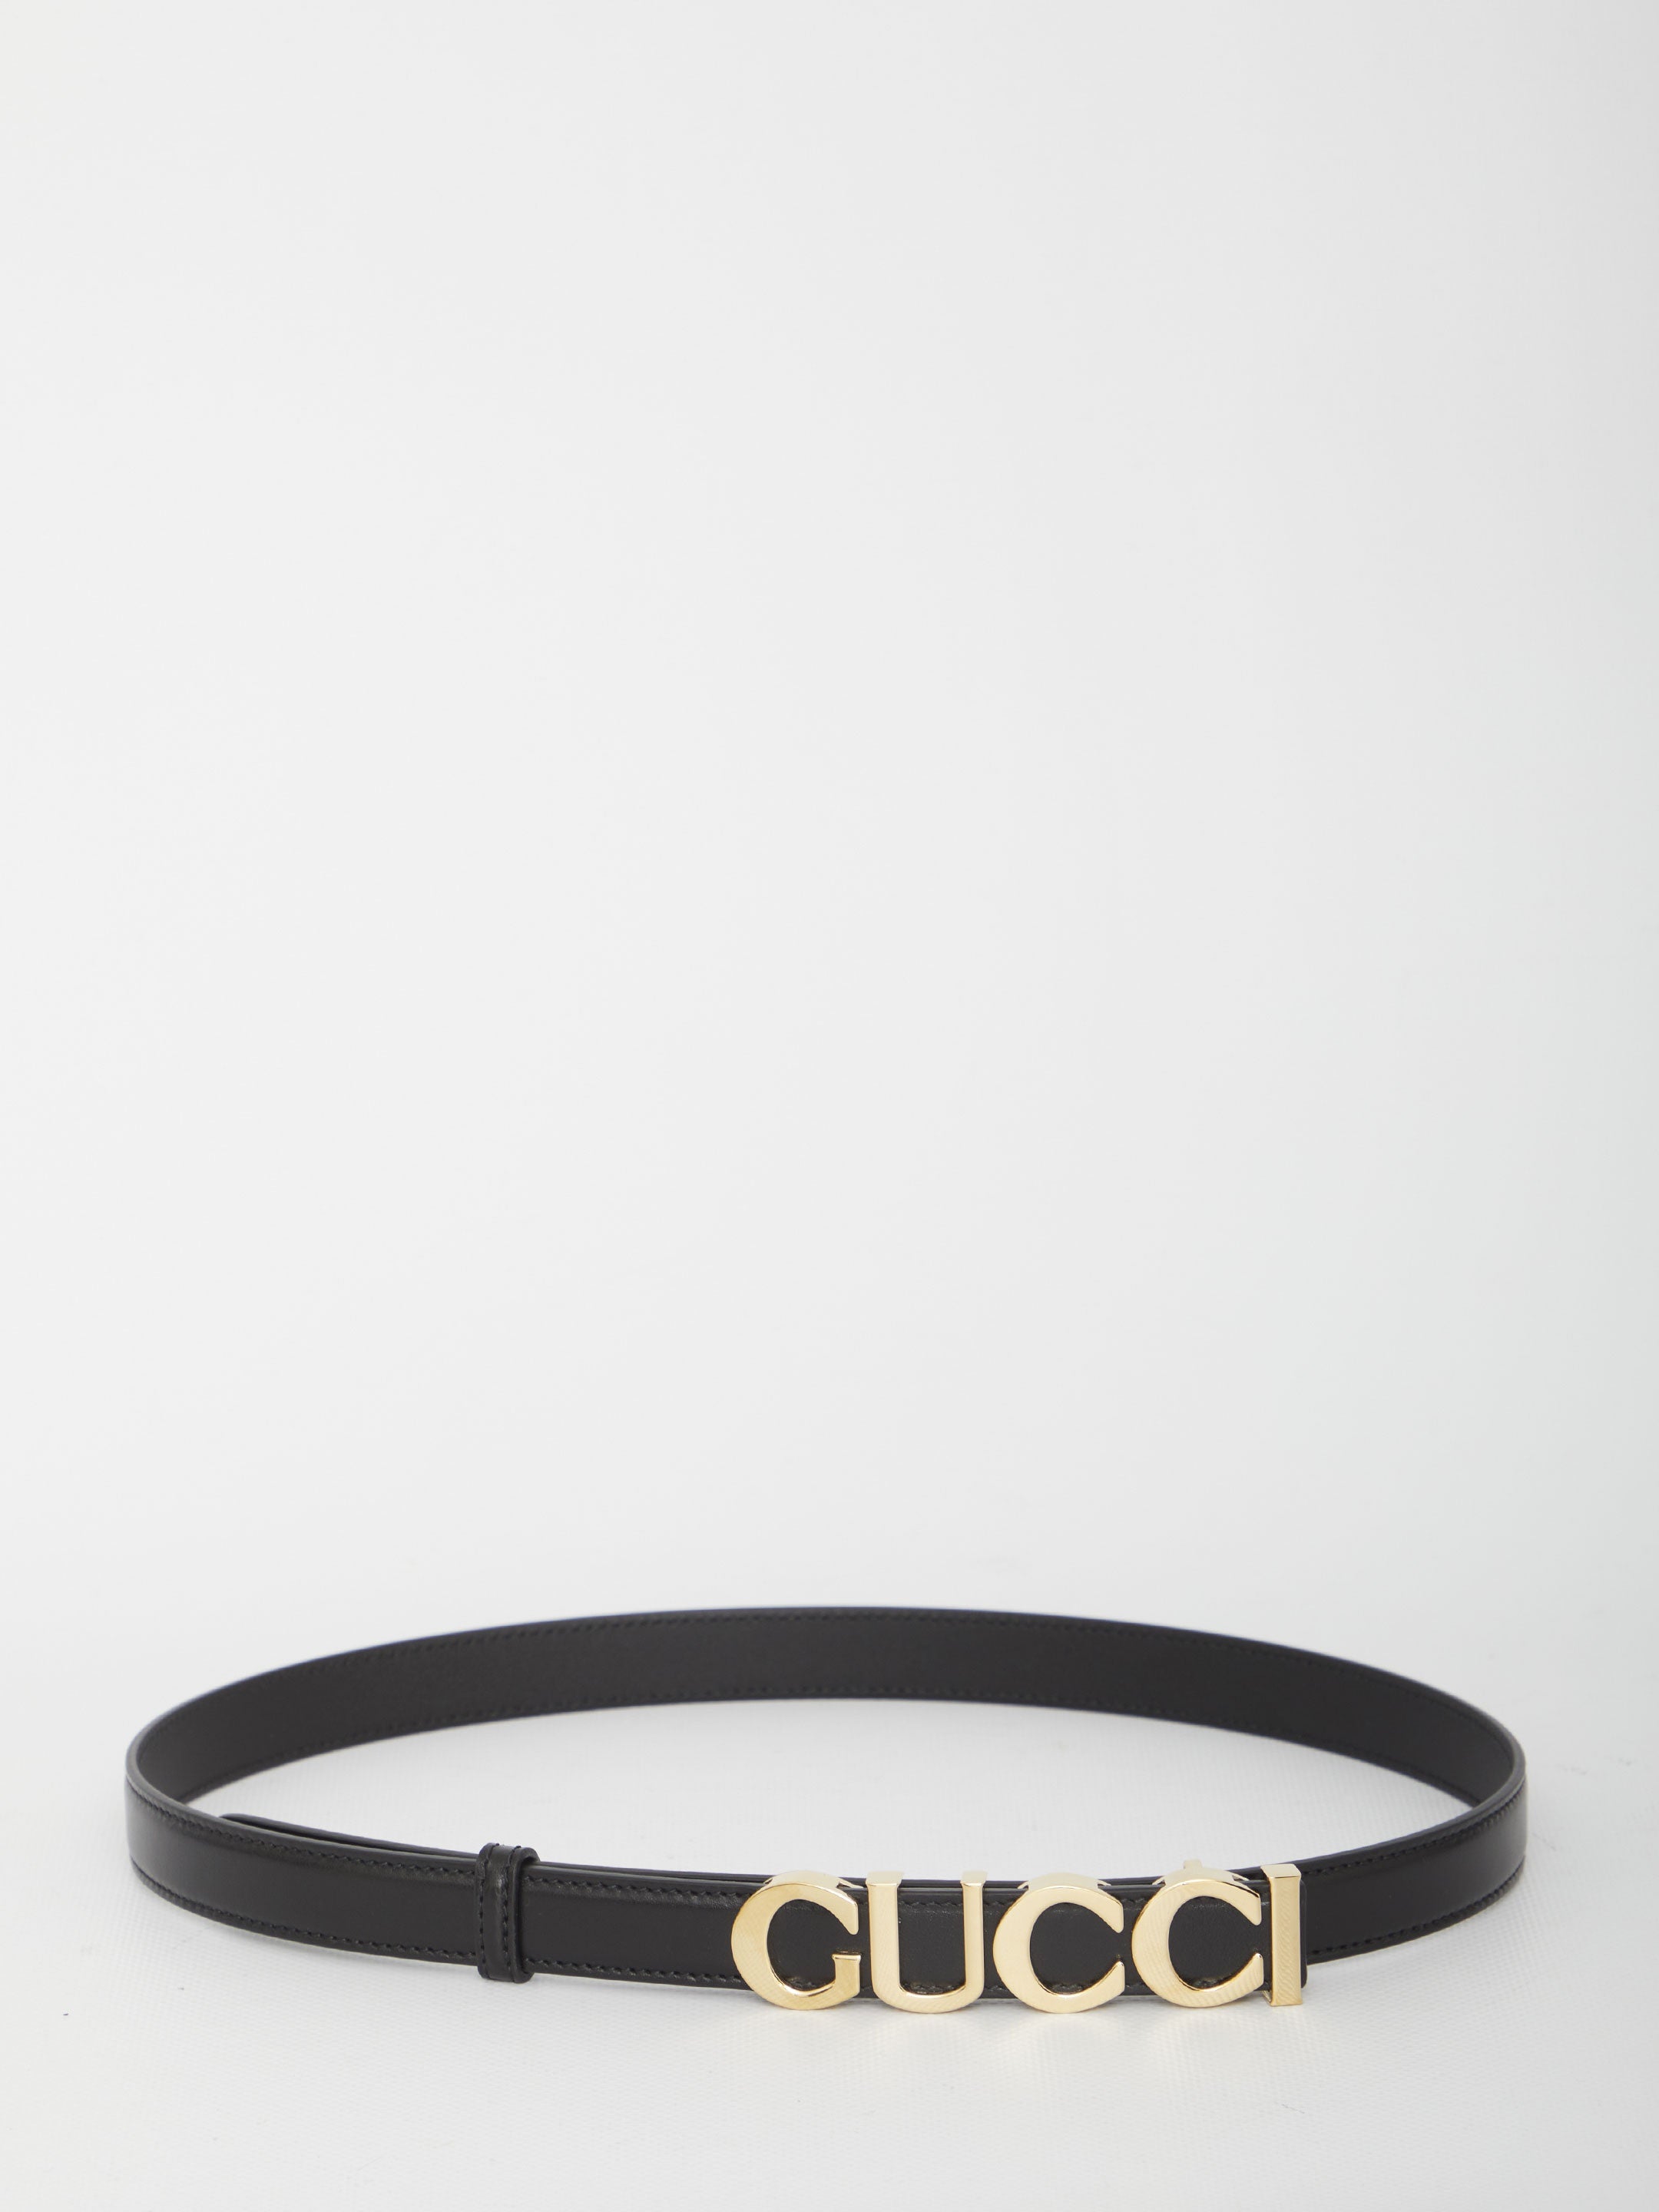 Gucci buckle belt